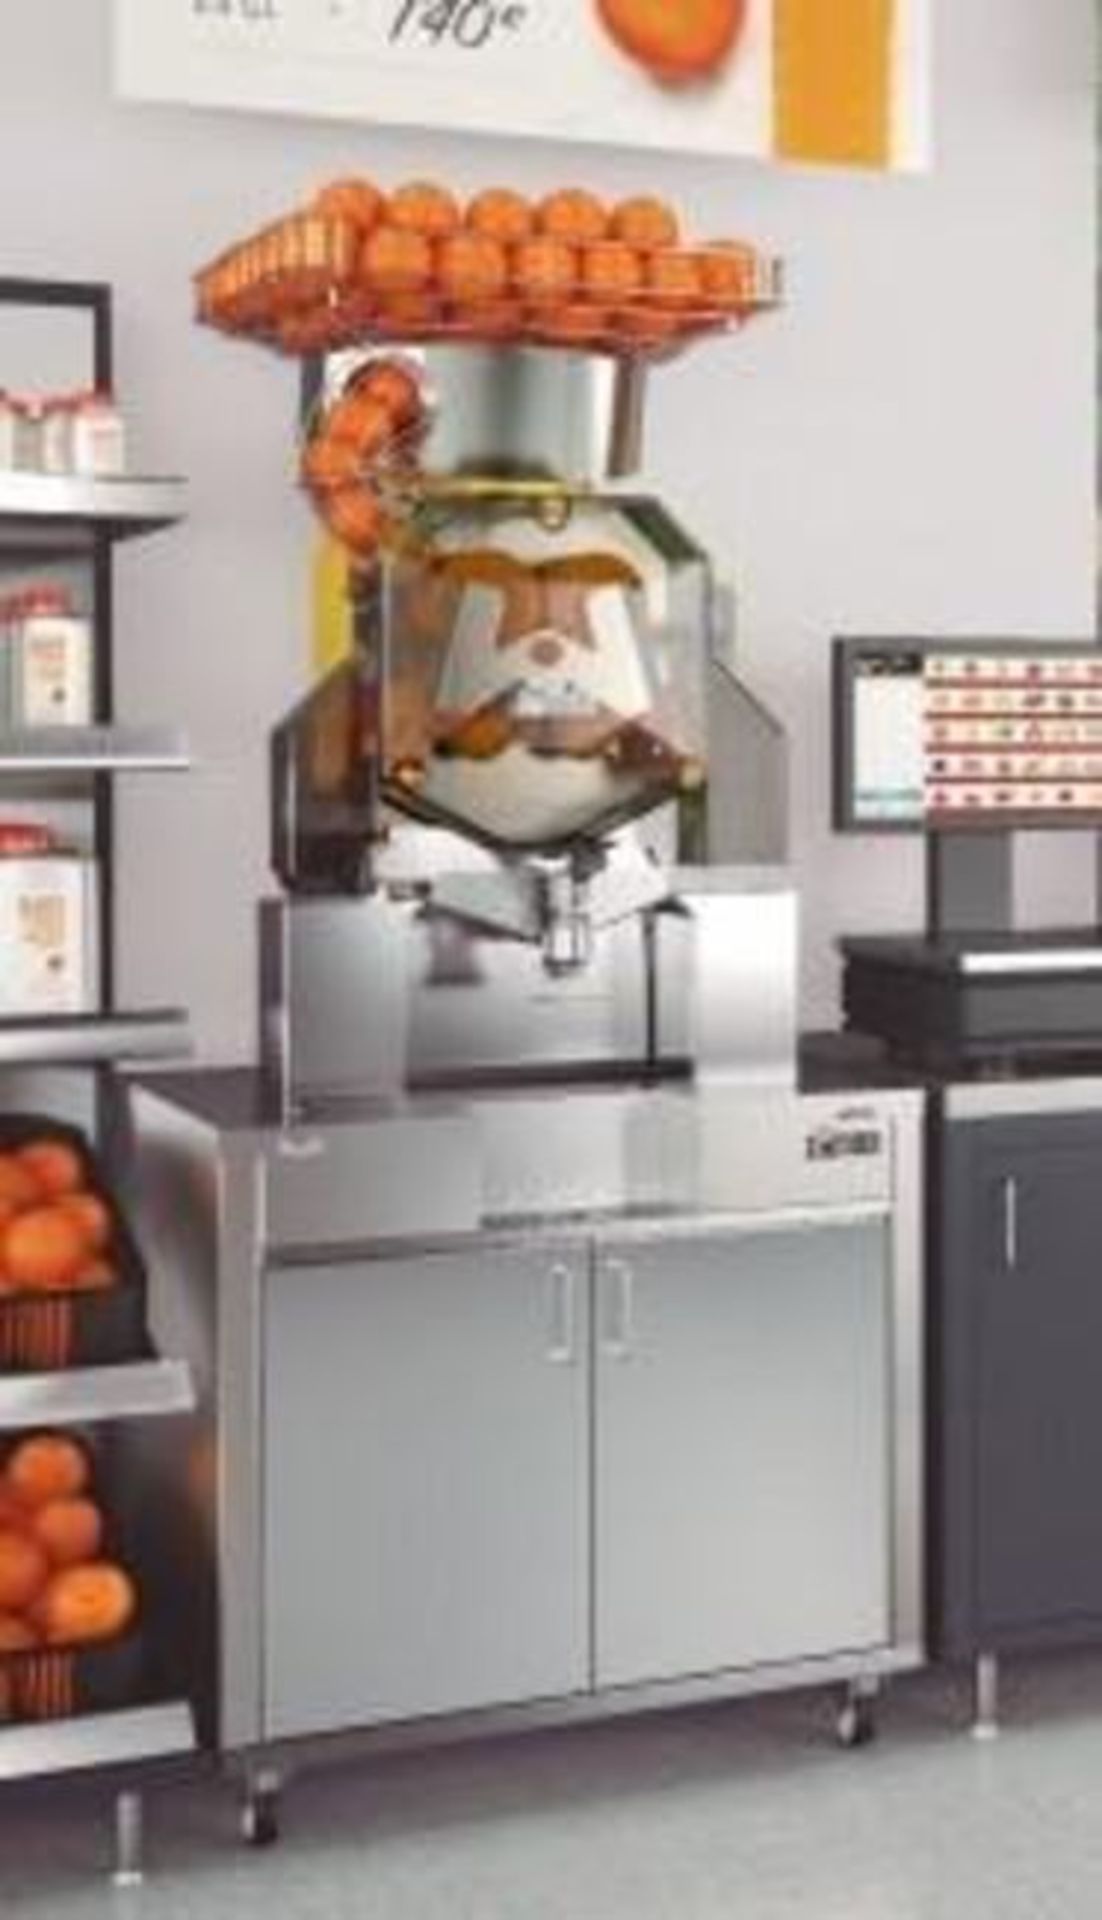 1 x Zumex Speed S +Plus Self-Service Podium Commercial Citrus Juicer - Manufactured in 2018 - Image 13 of 20